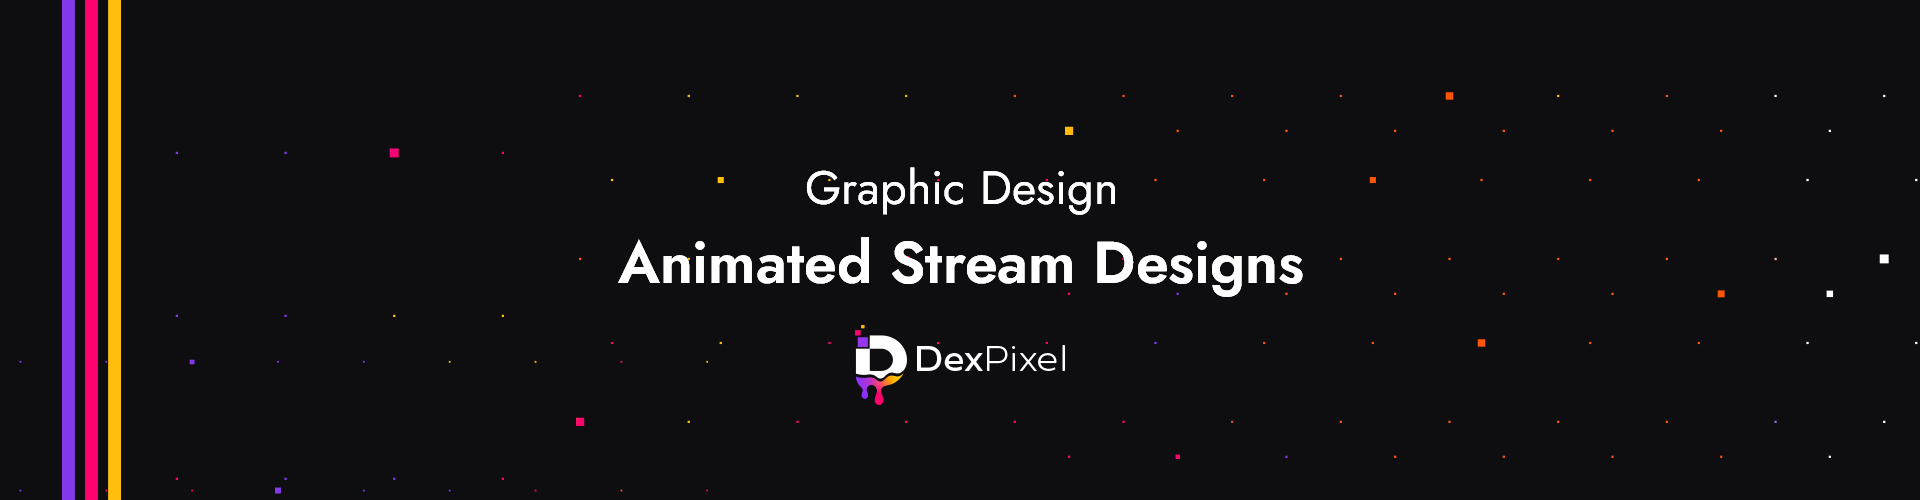 Dexpixel Social Stream Banner